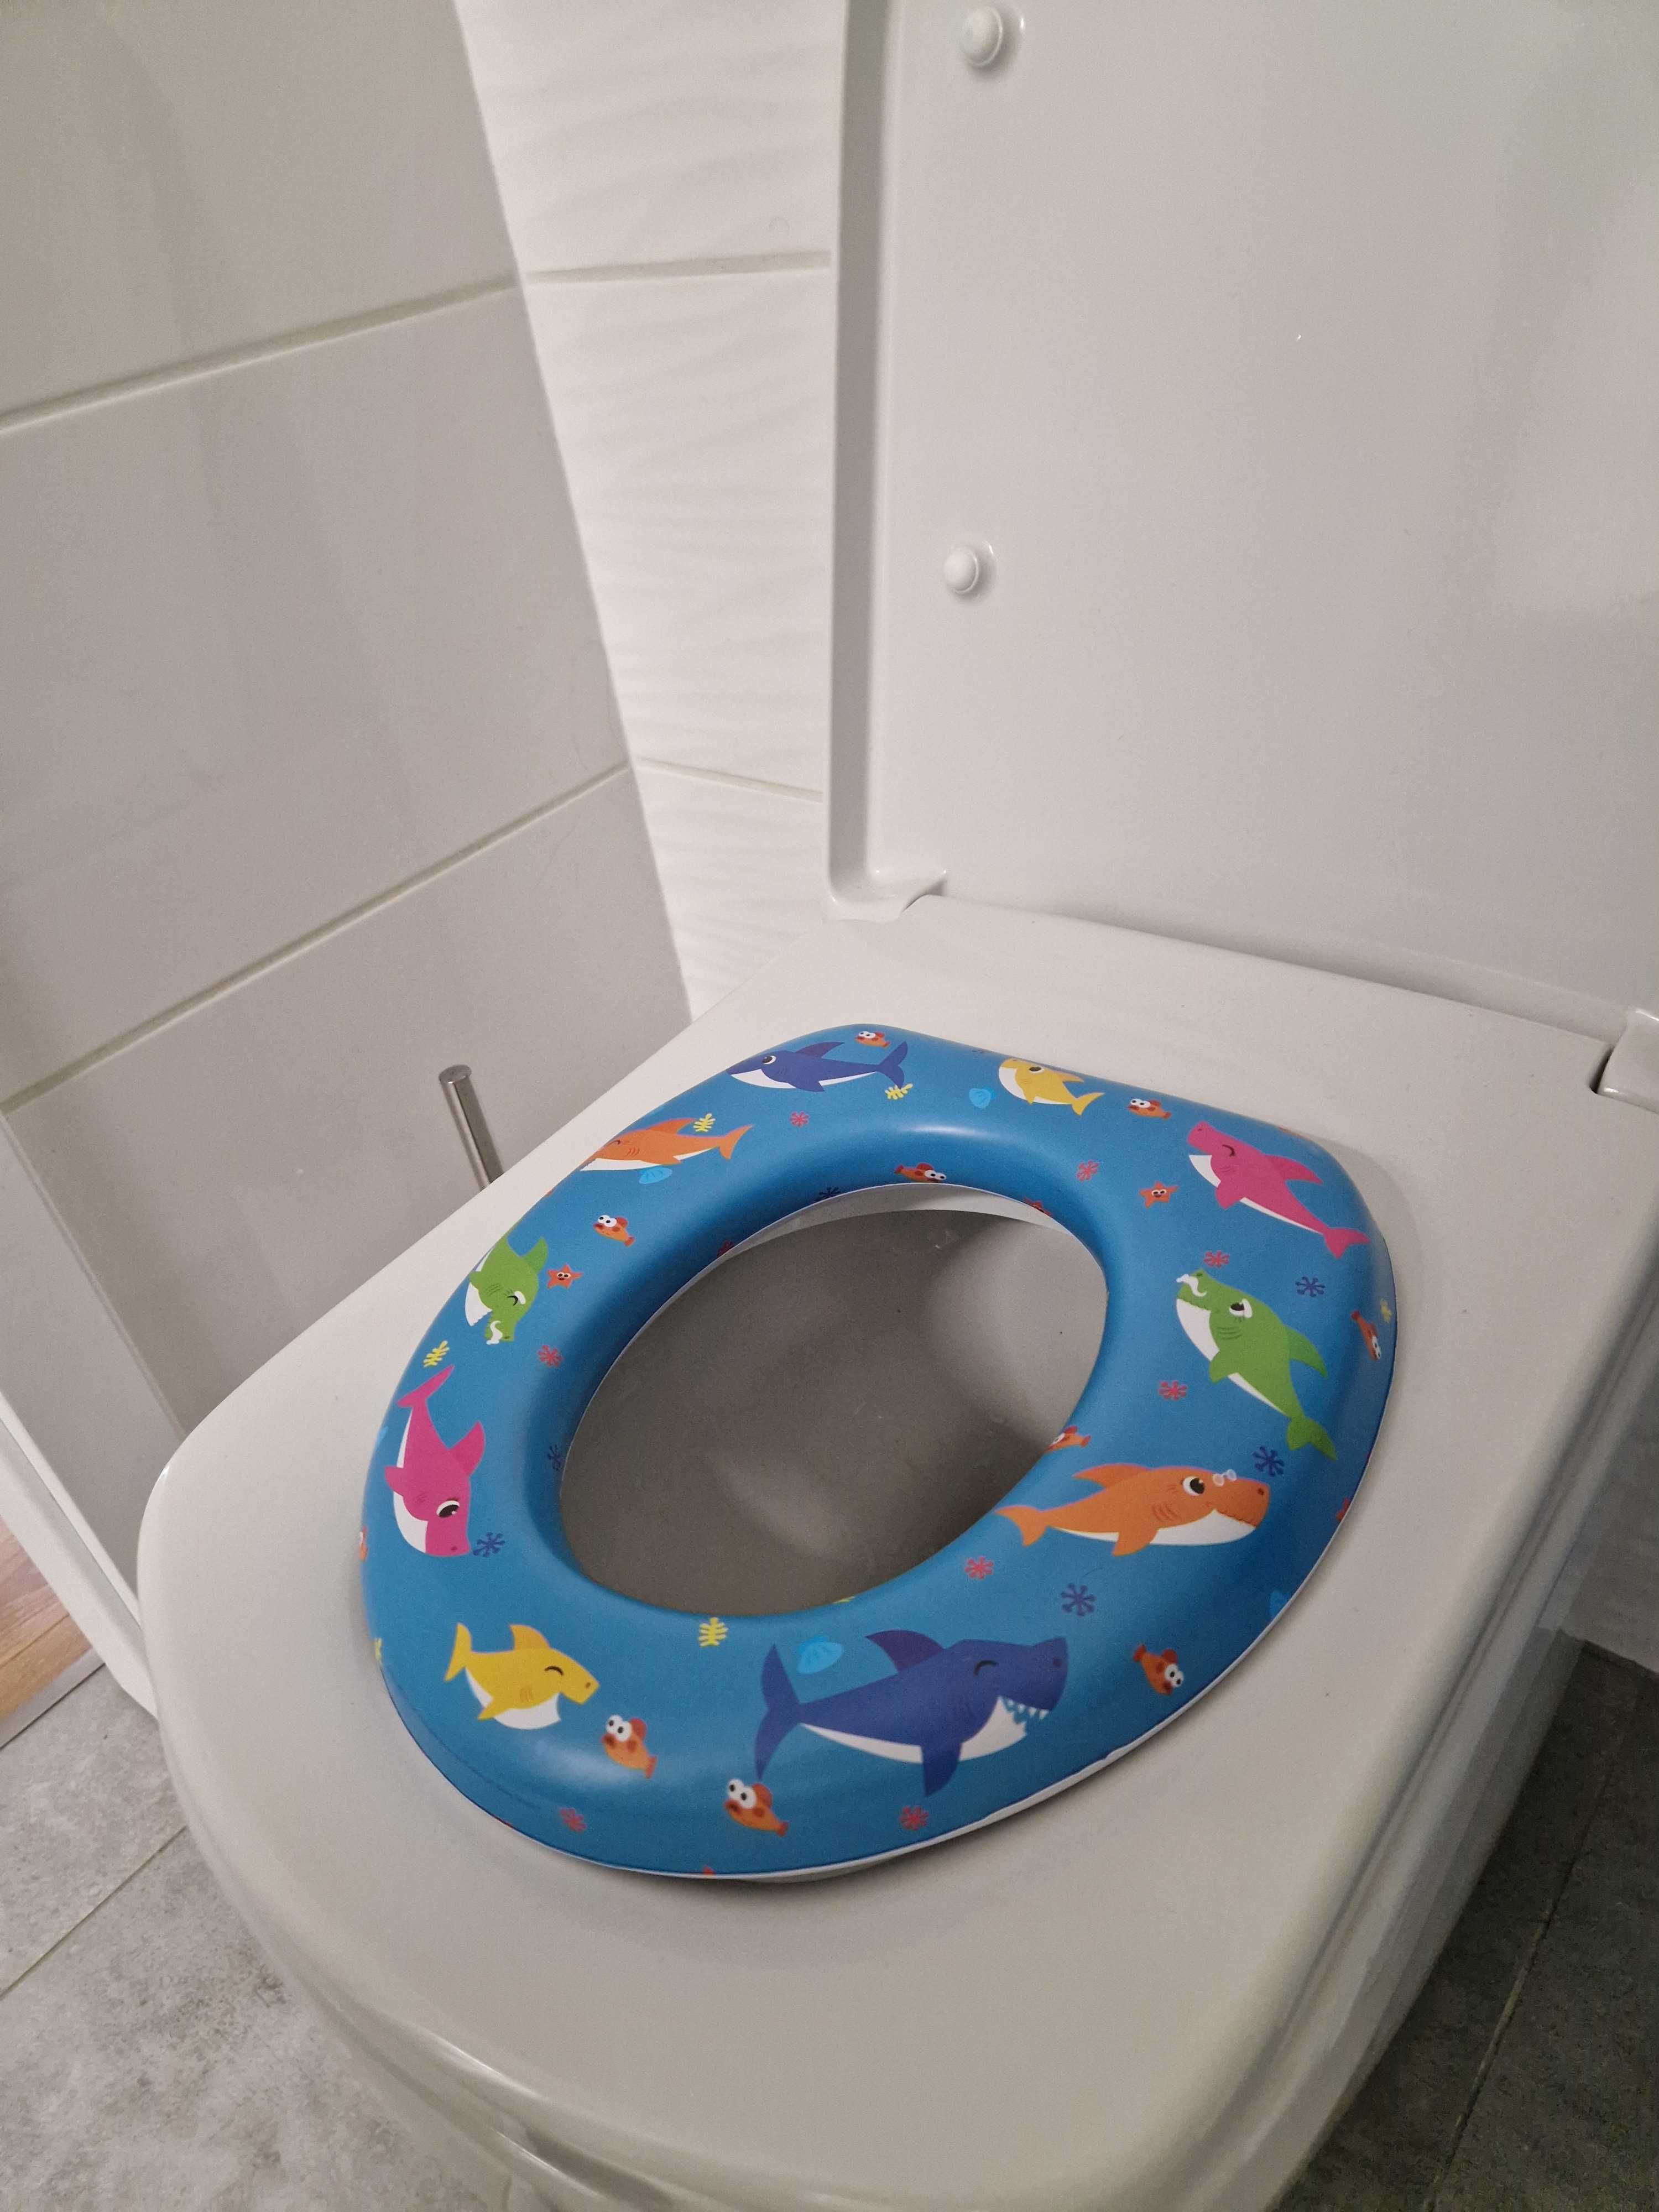 Nakladka na toaletę dla dziecka